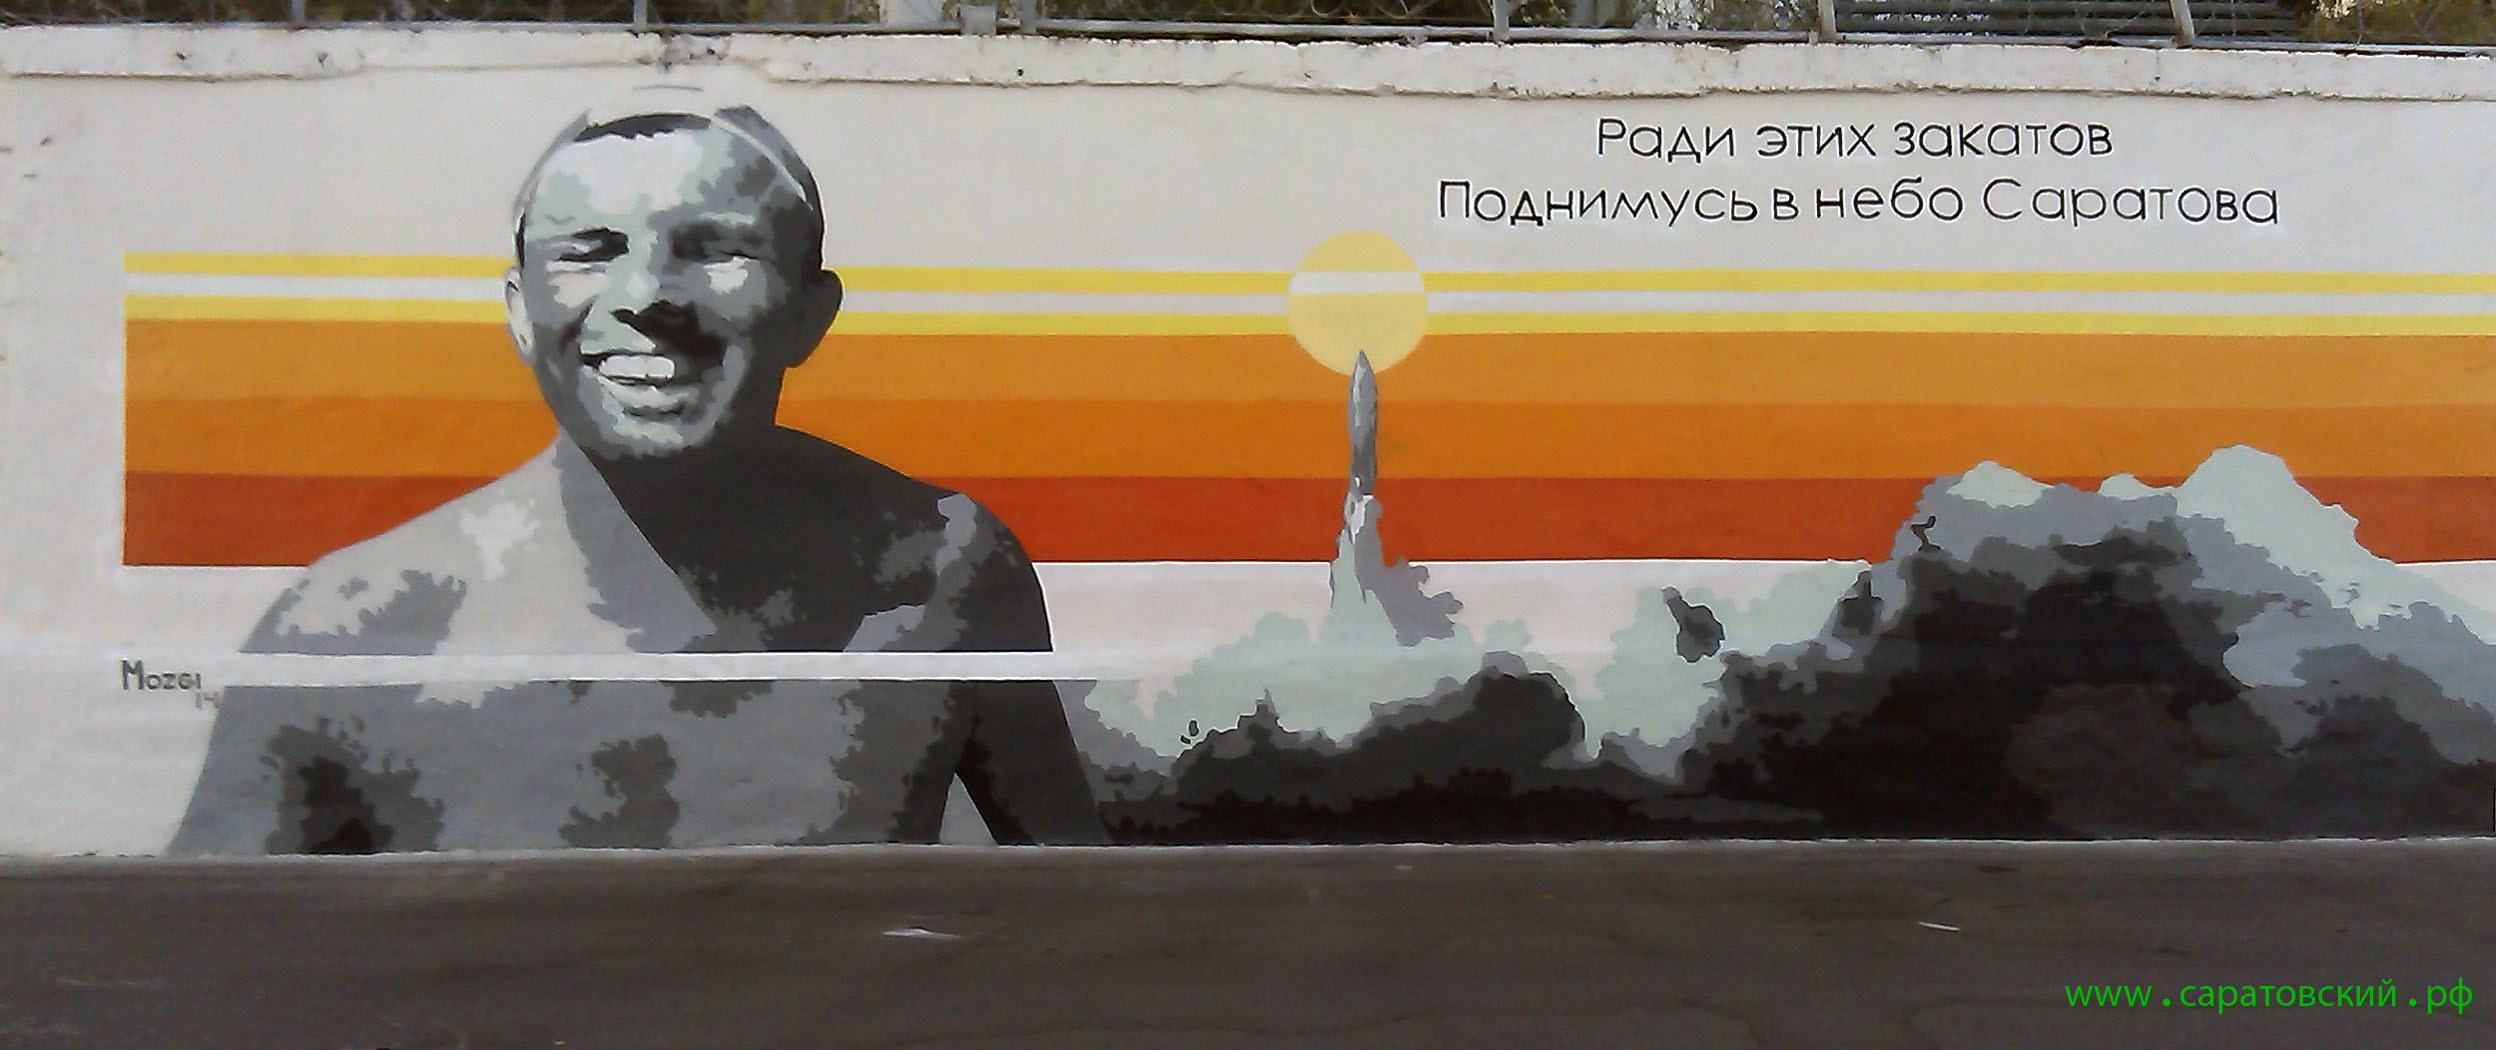 Saratov embankment graffiti: Yuri Gagarin and Saratov, Russia